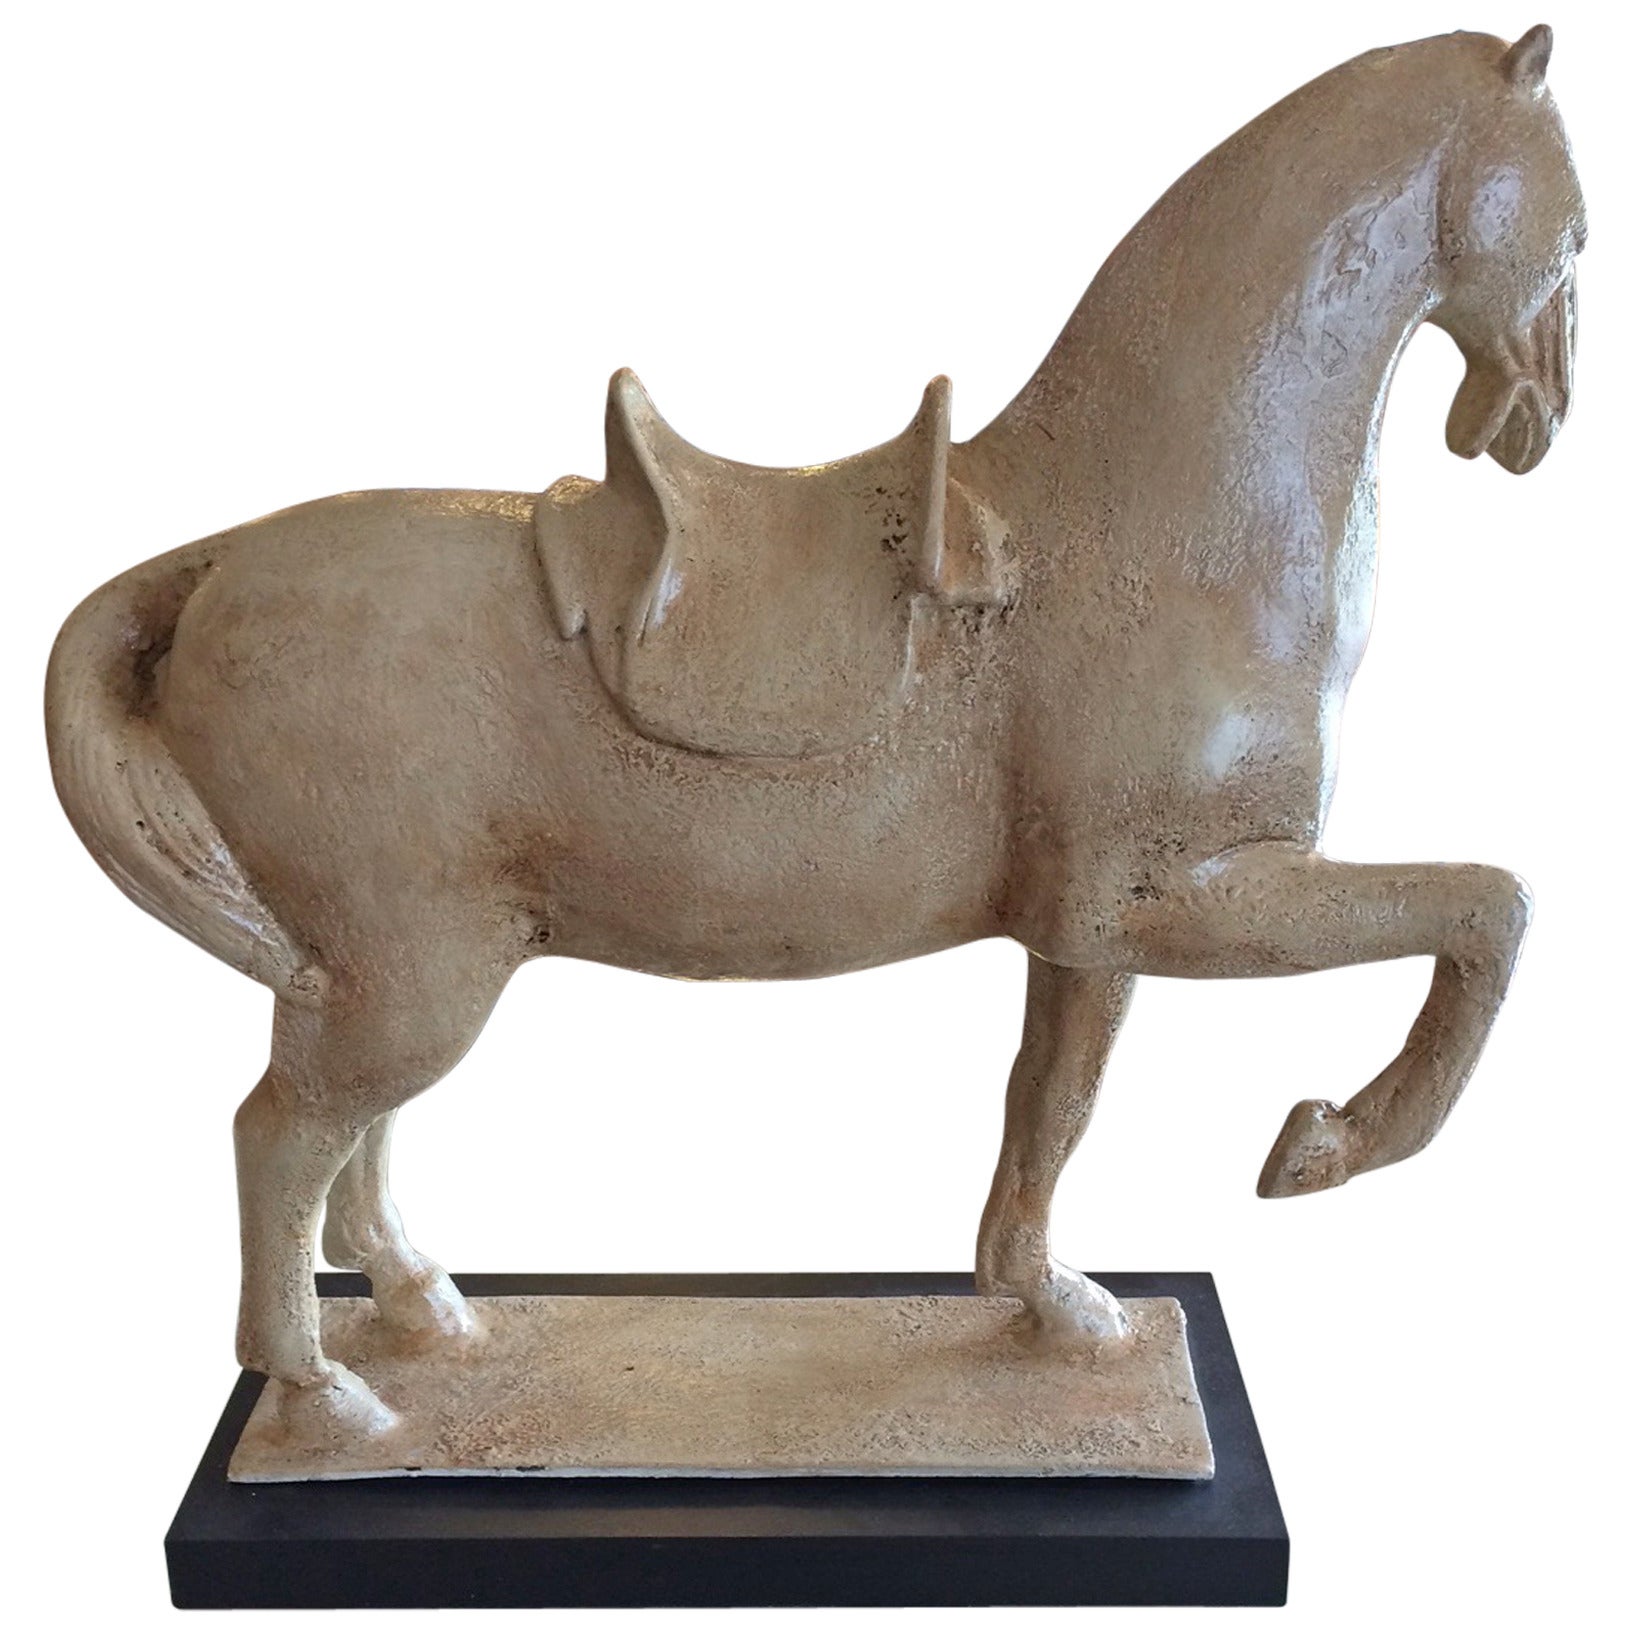 Impressive Painted Metal Sculpture of a Horse